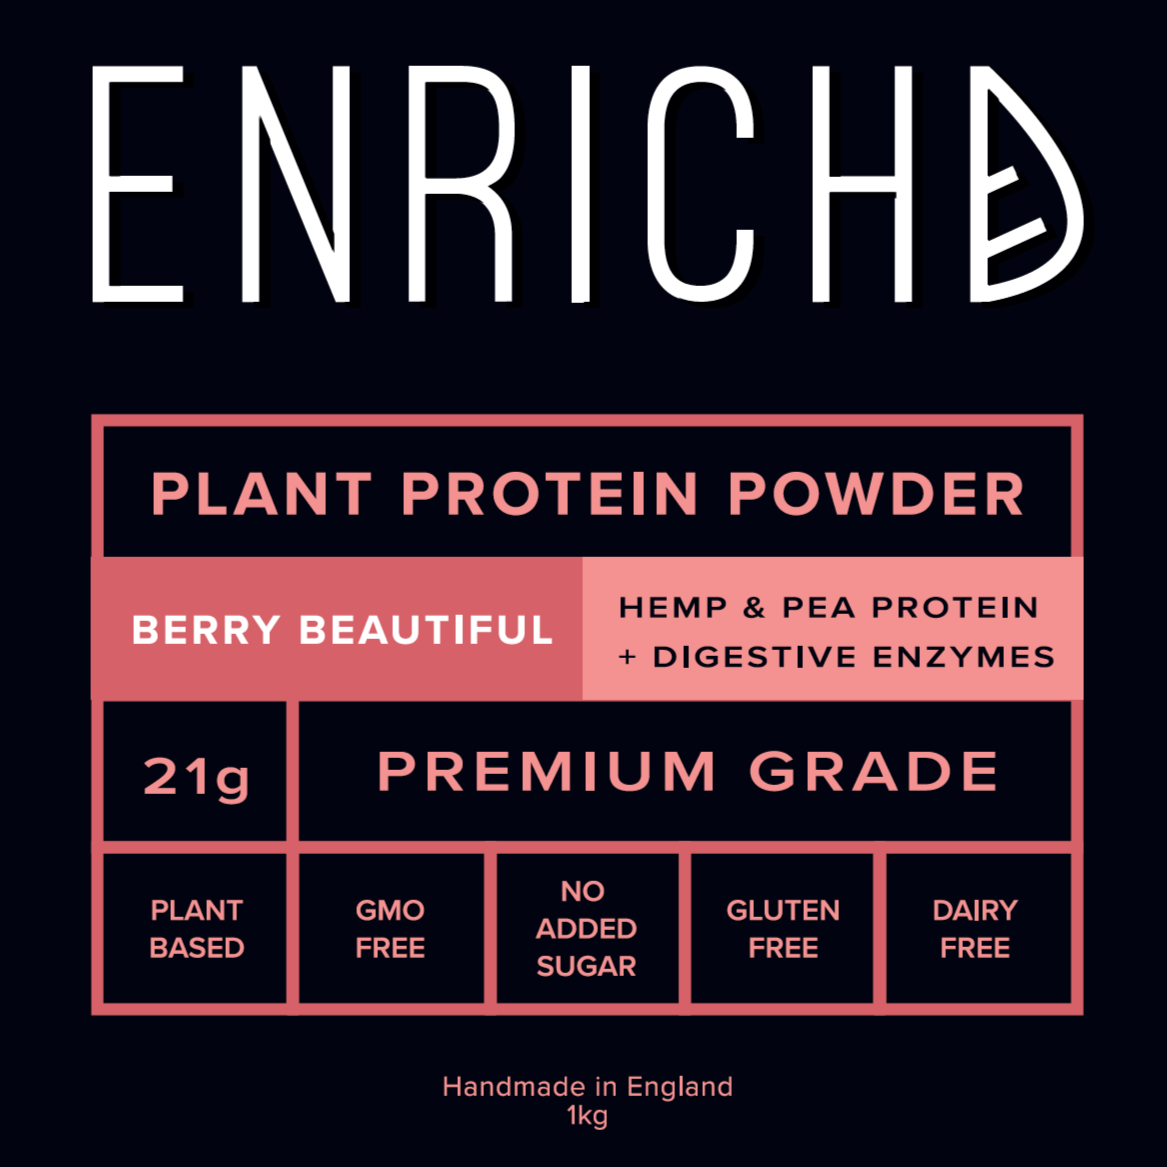 ENRICHD SUPERFOODS,  Protein, BERRY PROTEIN Powder,  Plant Based, Vegan, gluten free, dairy free, gmo free, protein powder